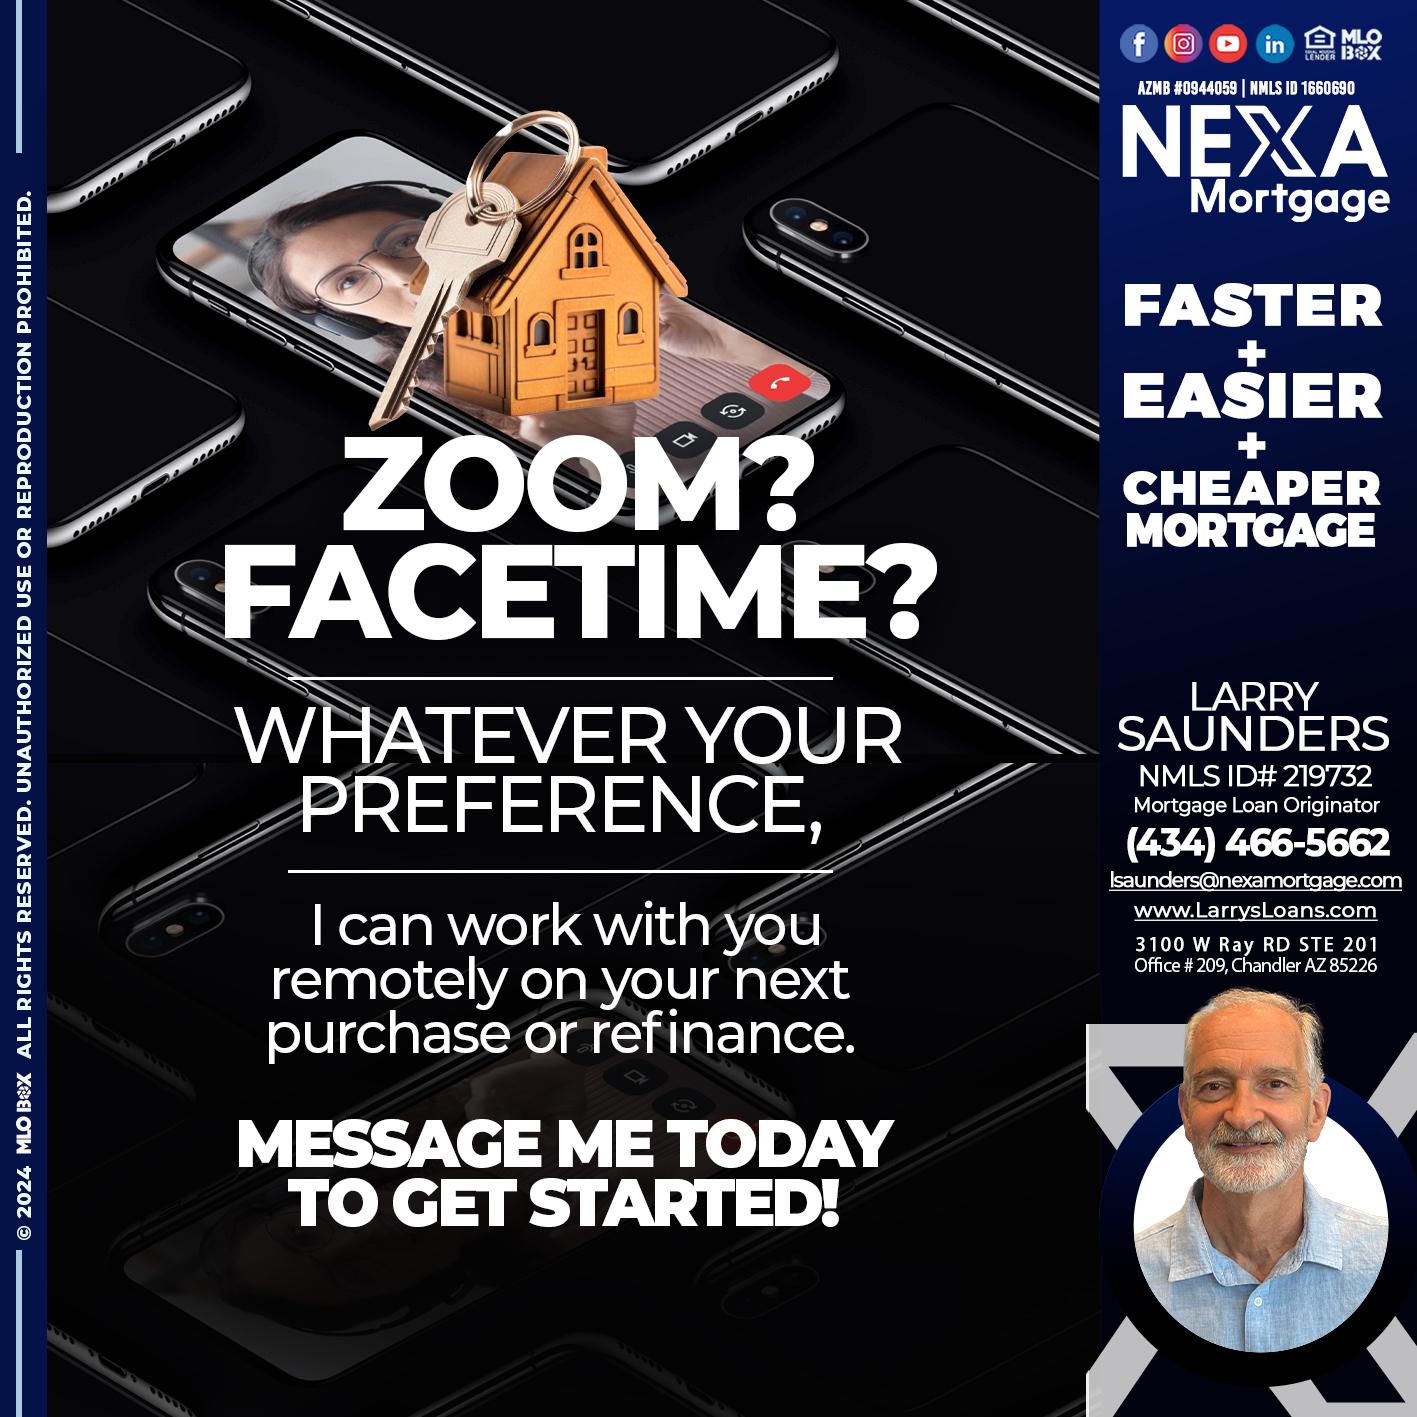 ZOOM FACETIME - Larry Saunders -Mortgage Loan Originator